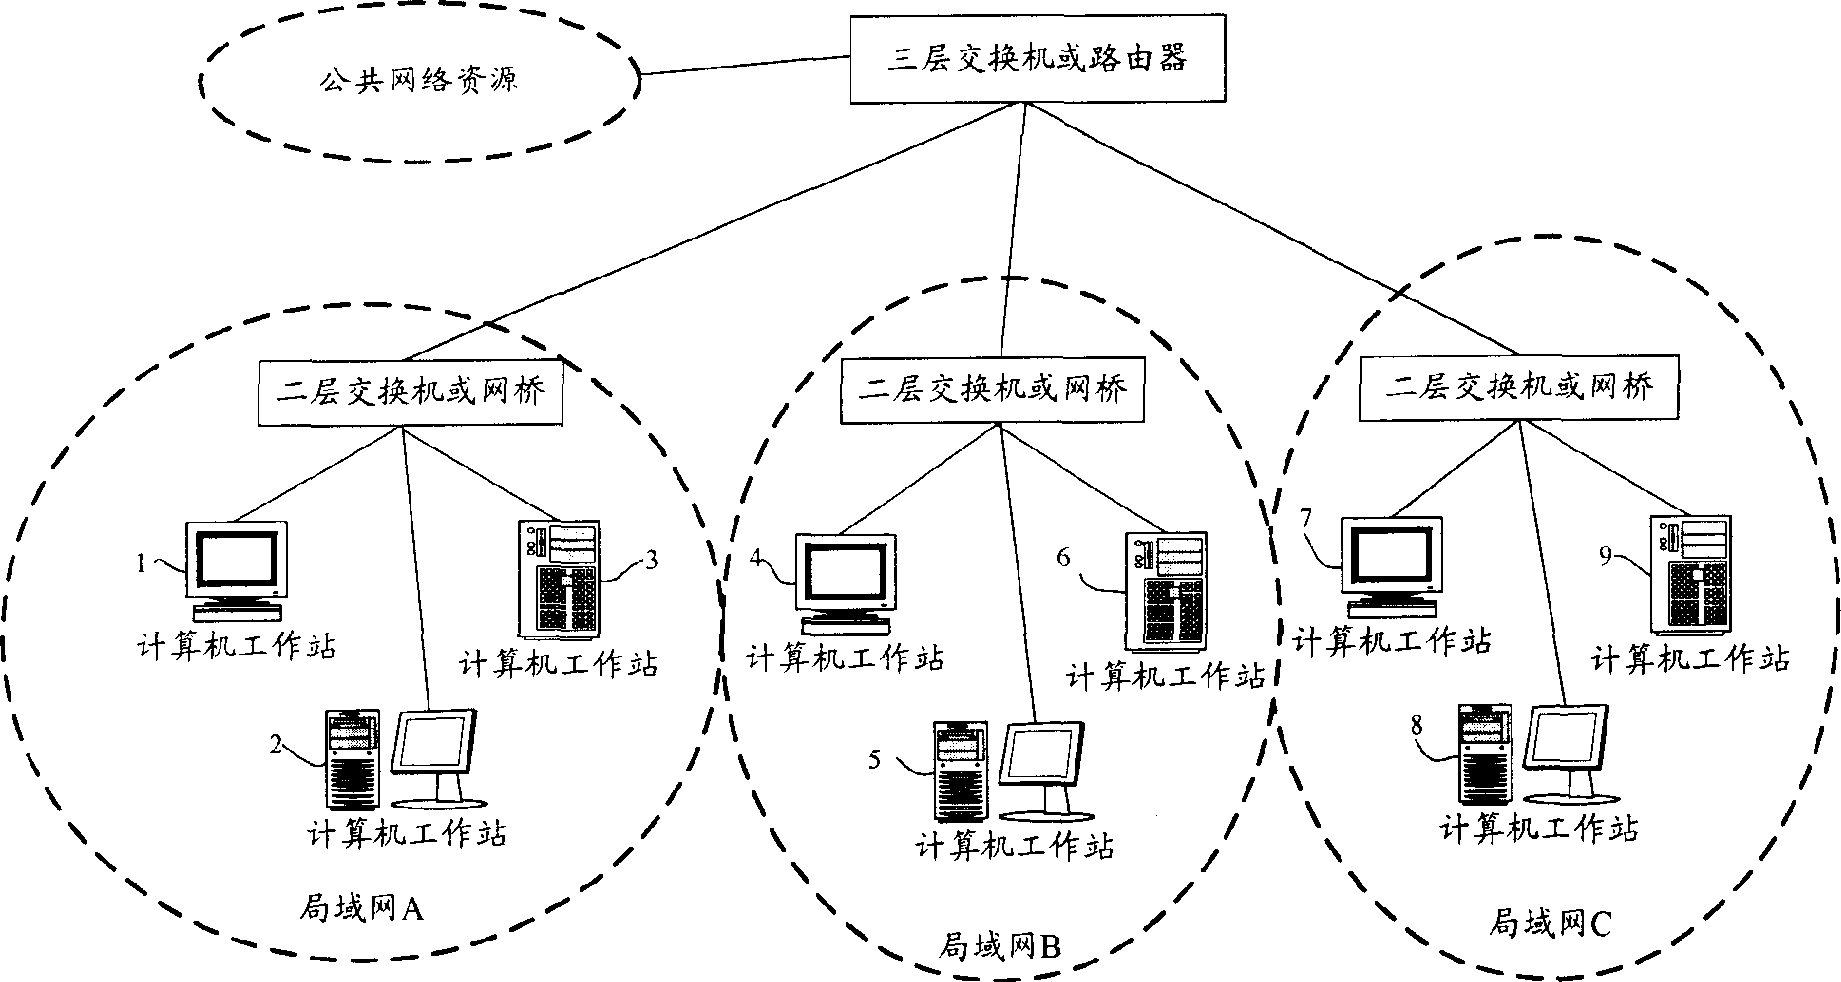 Data exchange method based on virtual local area network